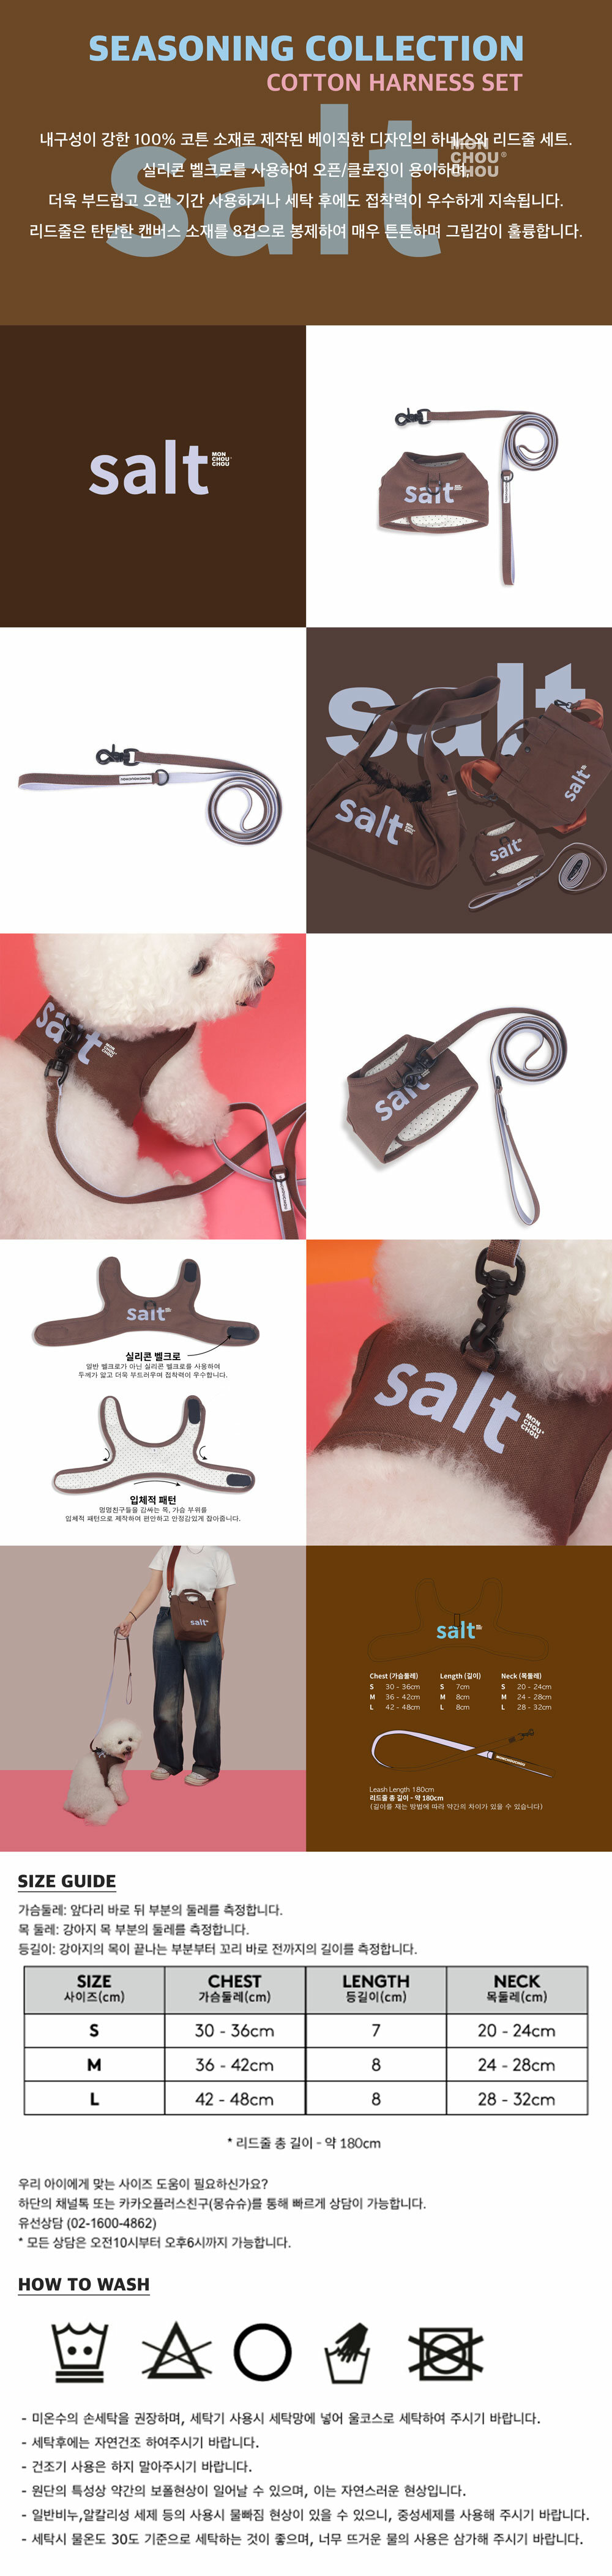 salt-harness-info.jpg